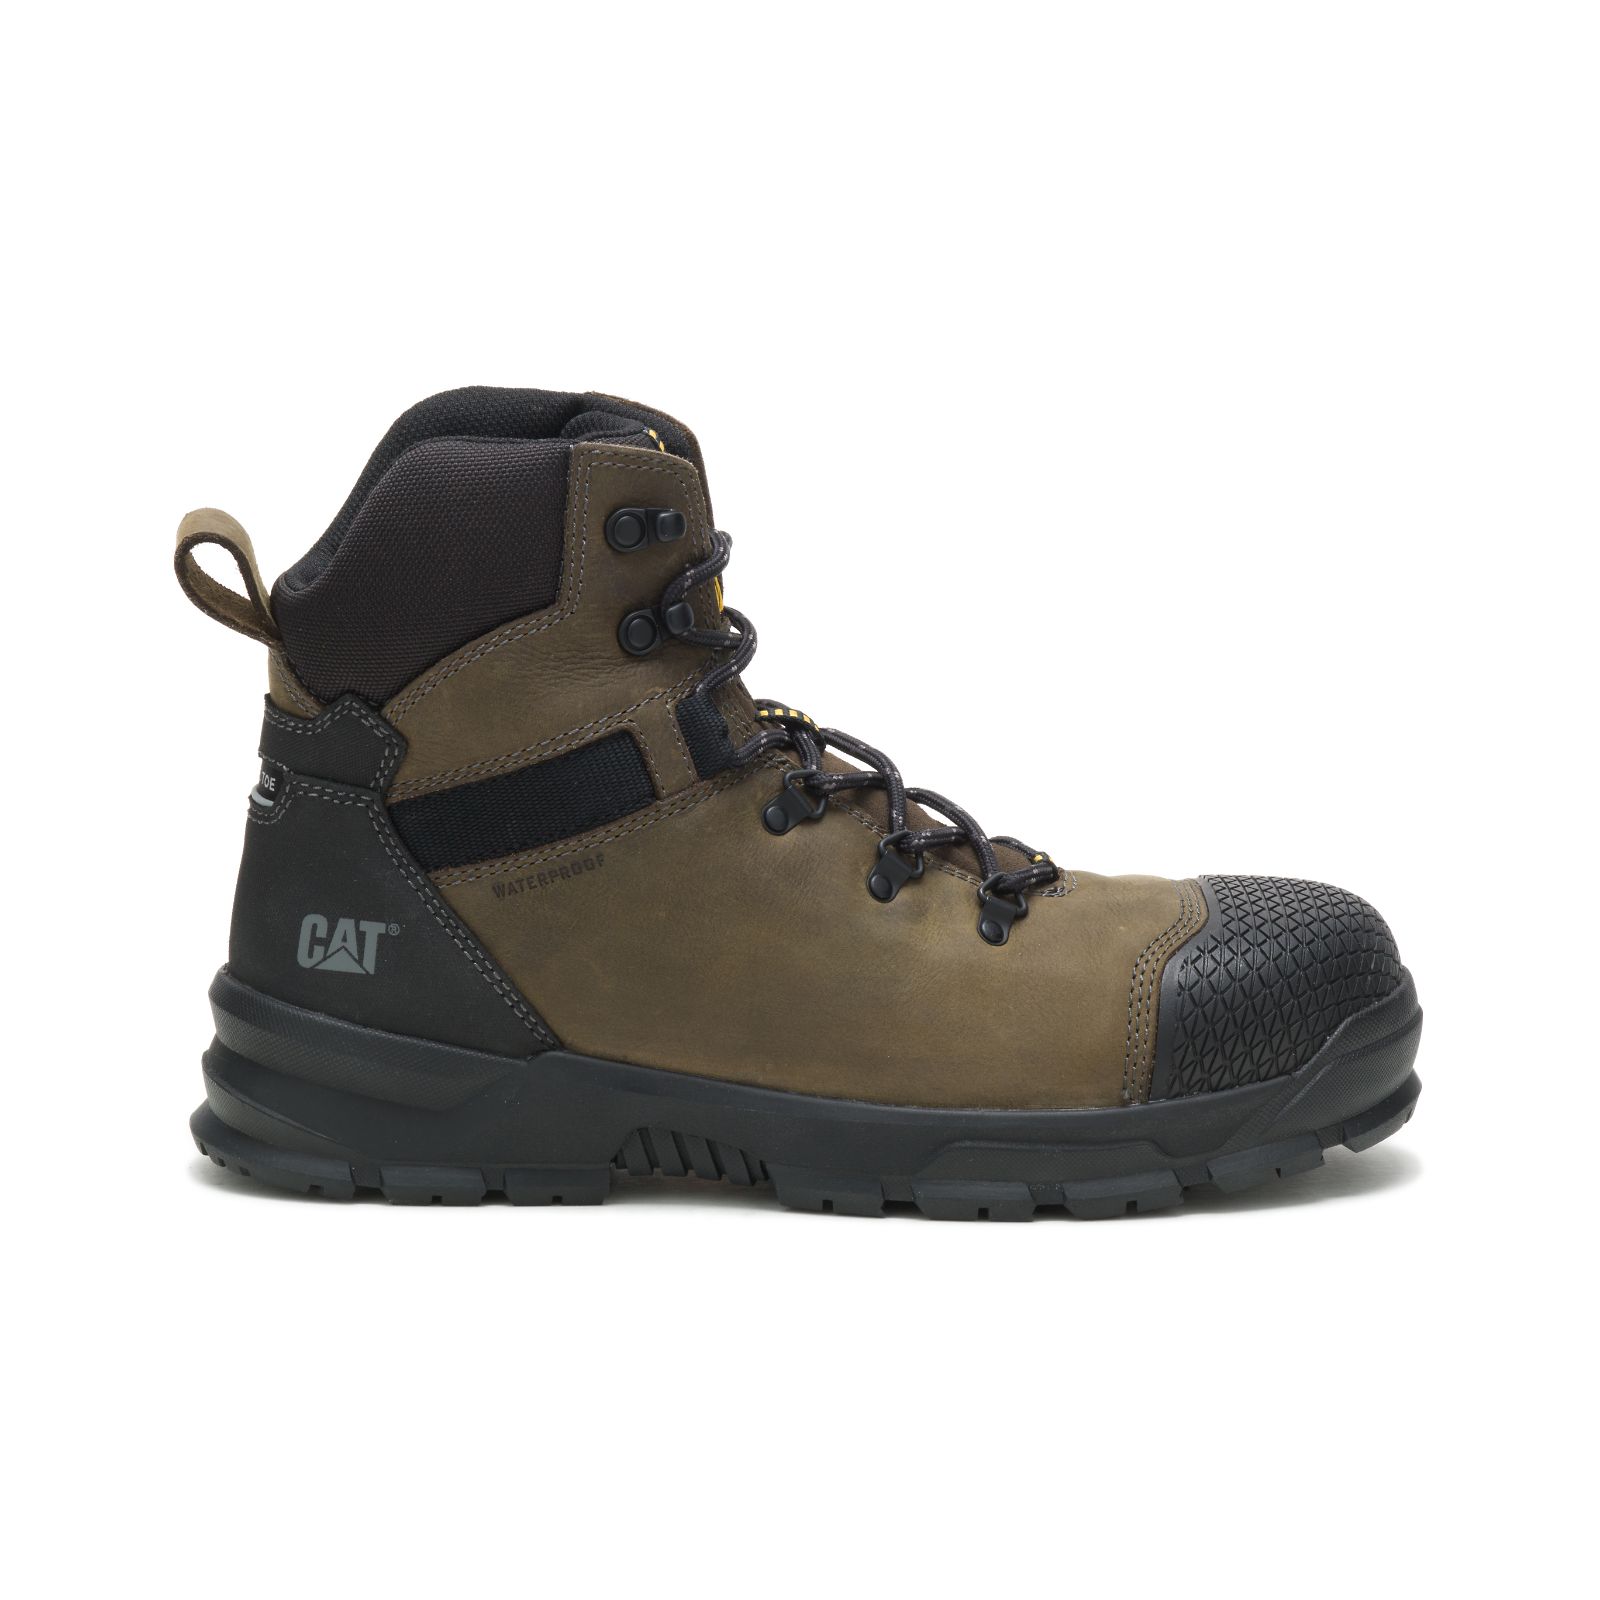 Caterpillar Work Boots Dubai - Caterpillar Accomplice X Waterproof Steel Toe Mens - Deep Green/Black NZPHMX538